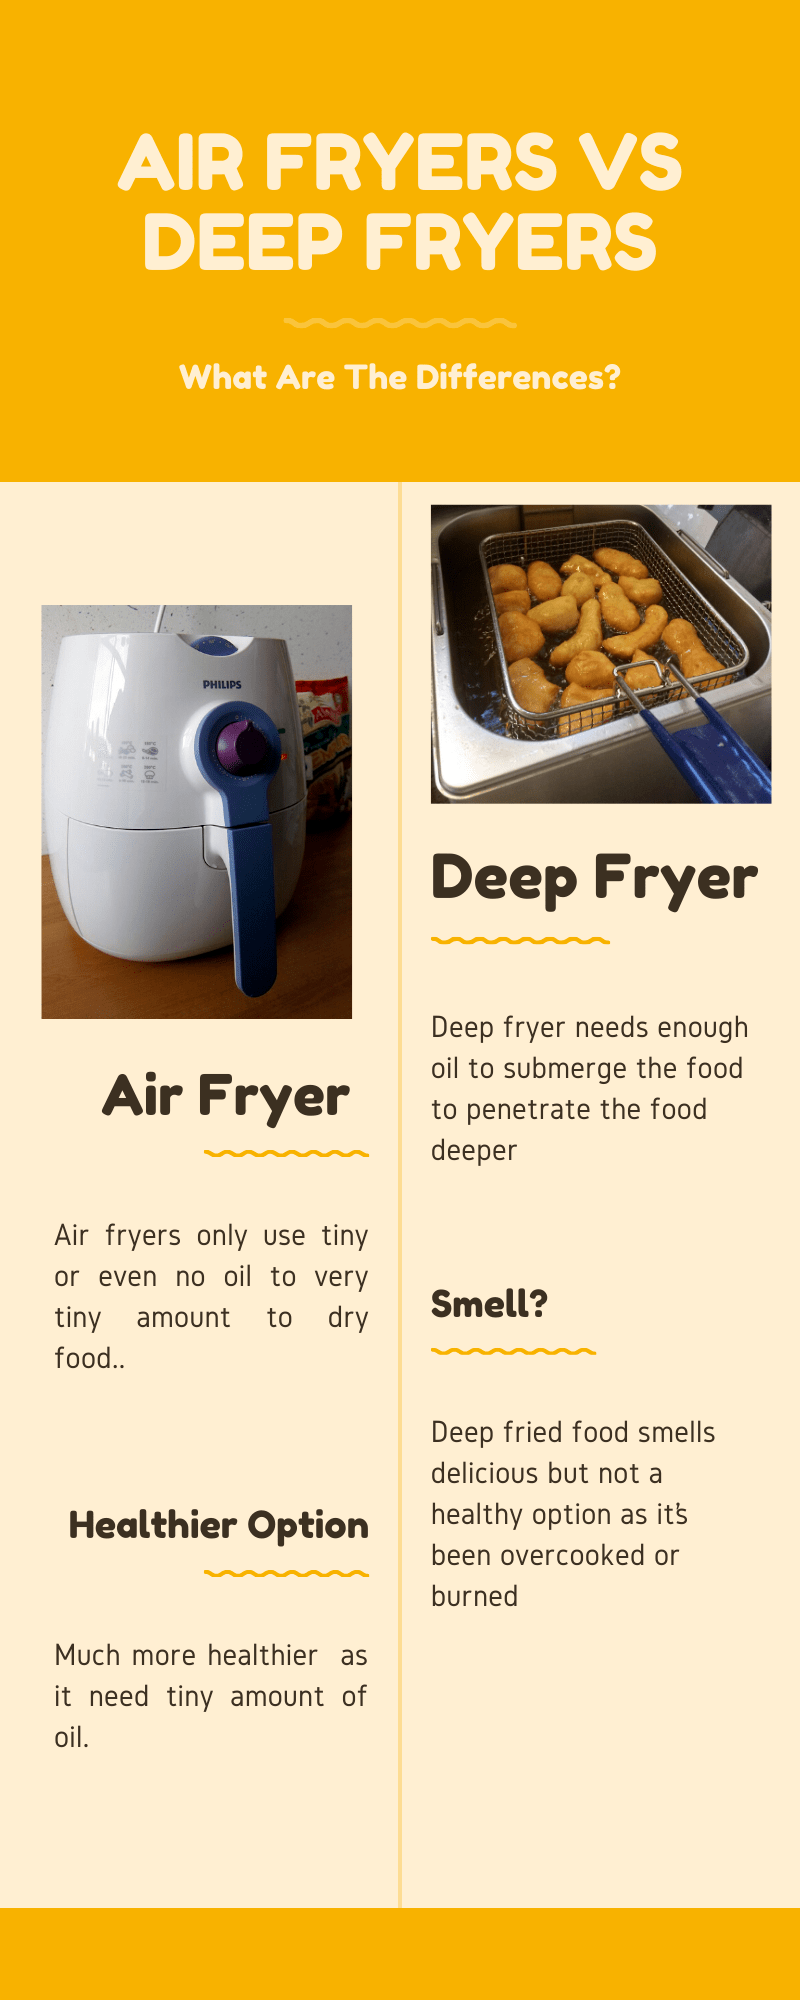 Deep fryer vs Air fryer